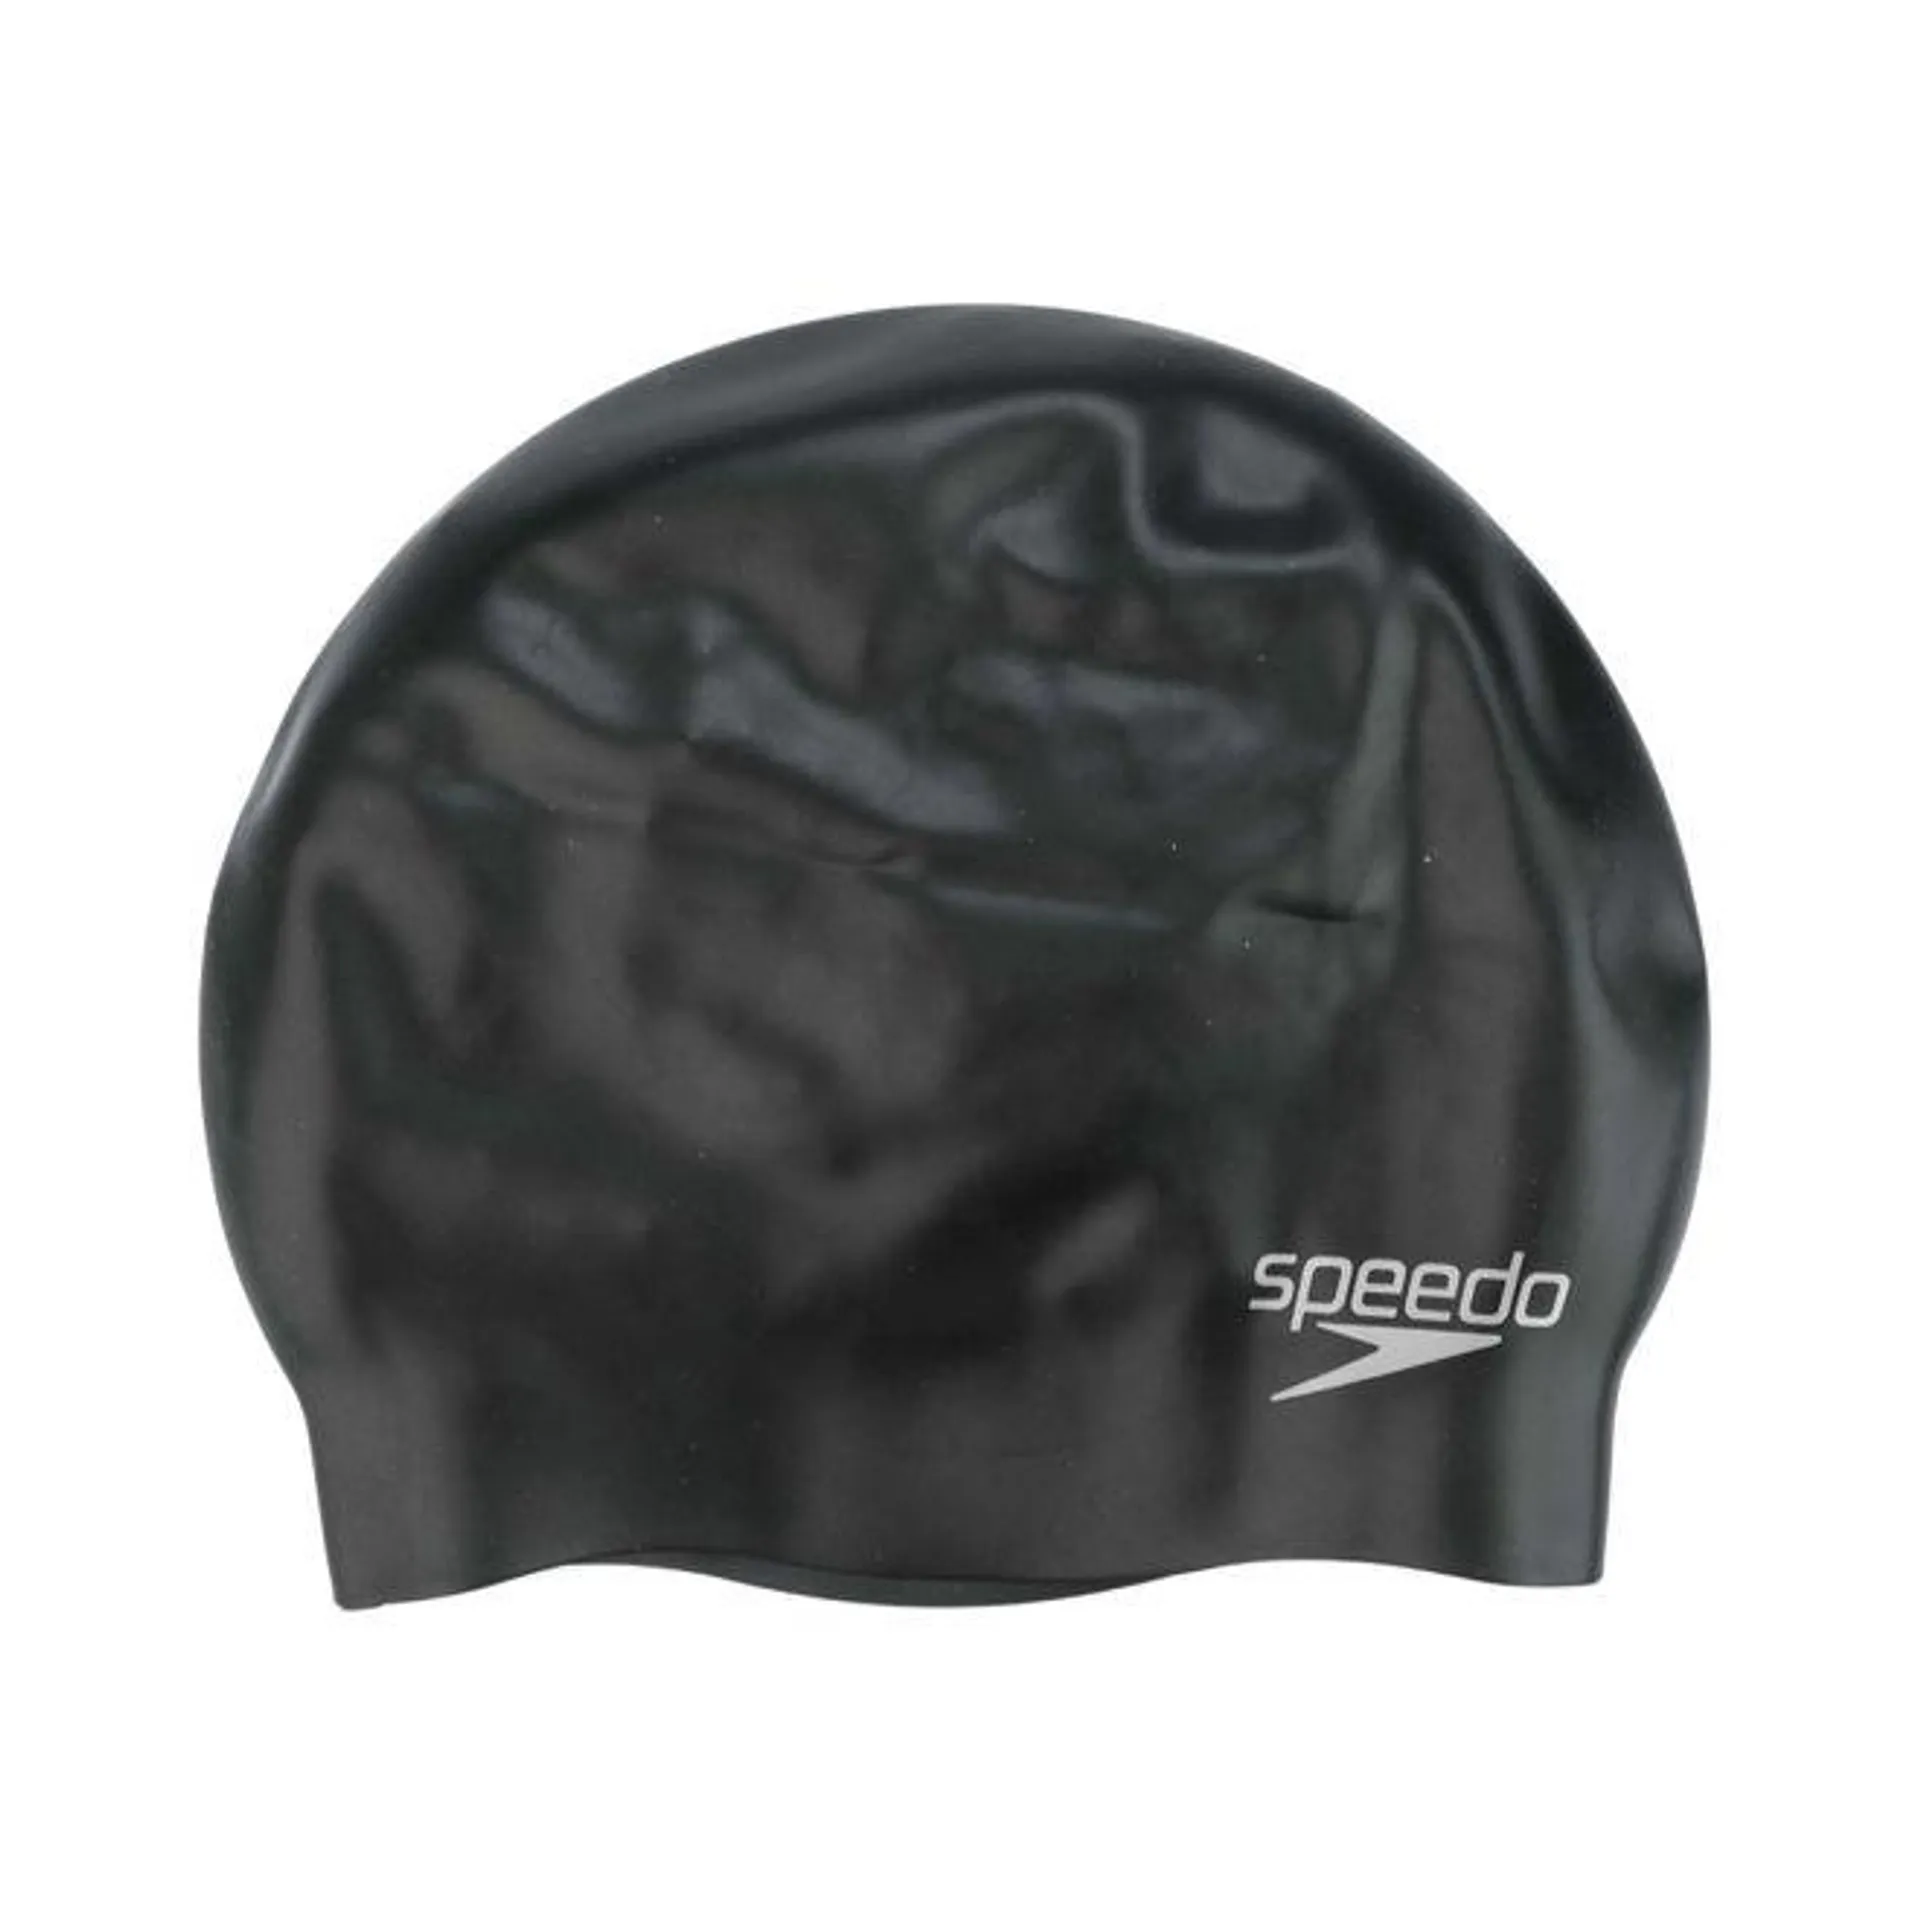 Speedo Plain Moulded Silicone Cap in Black